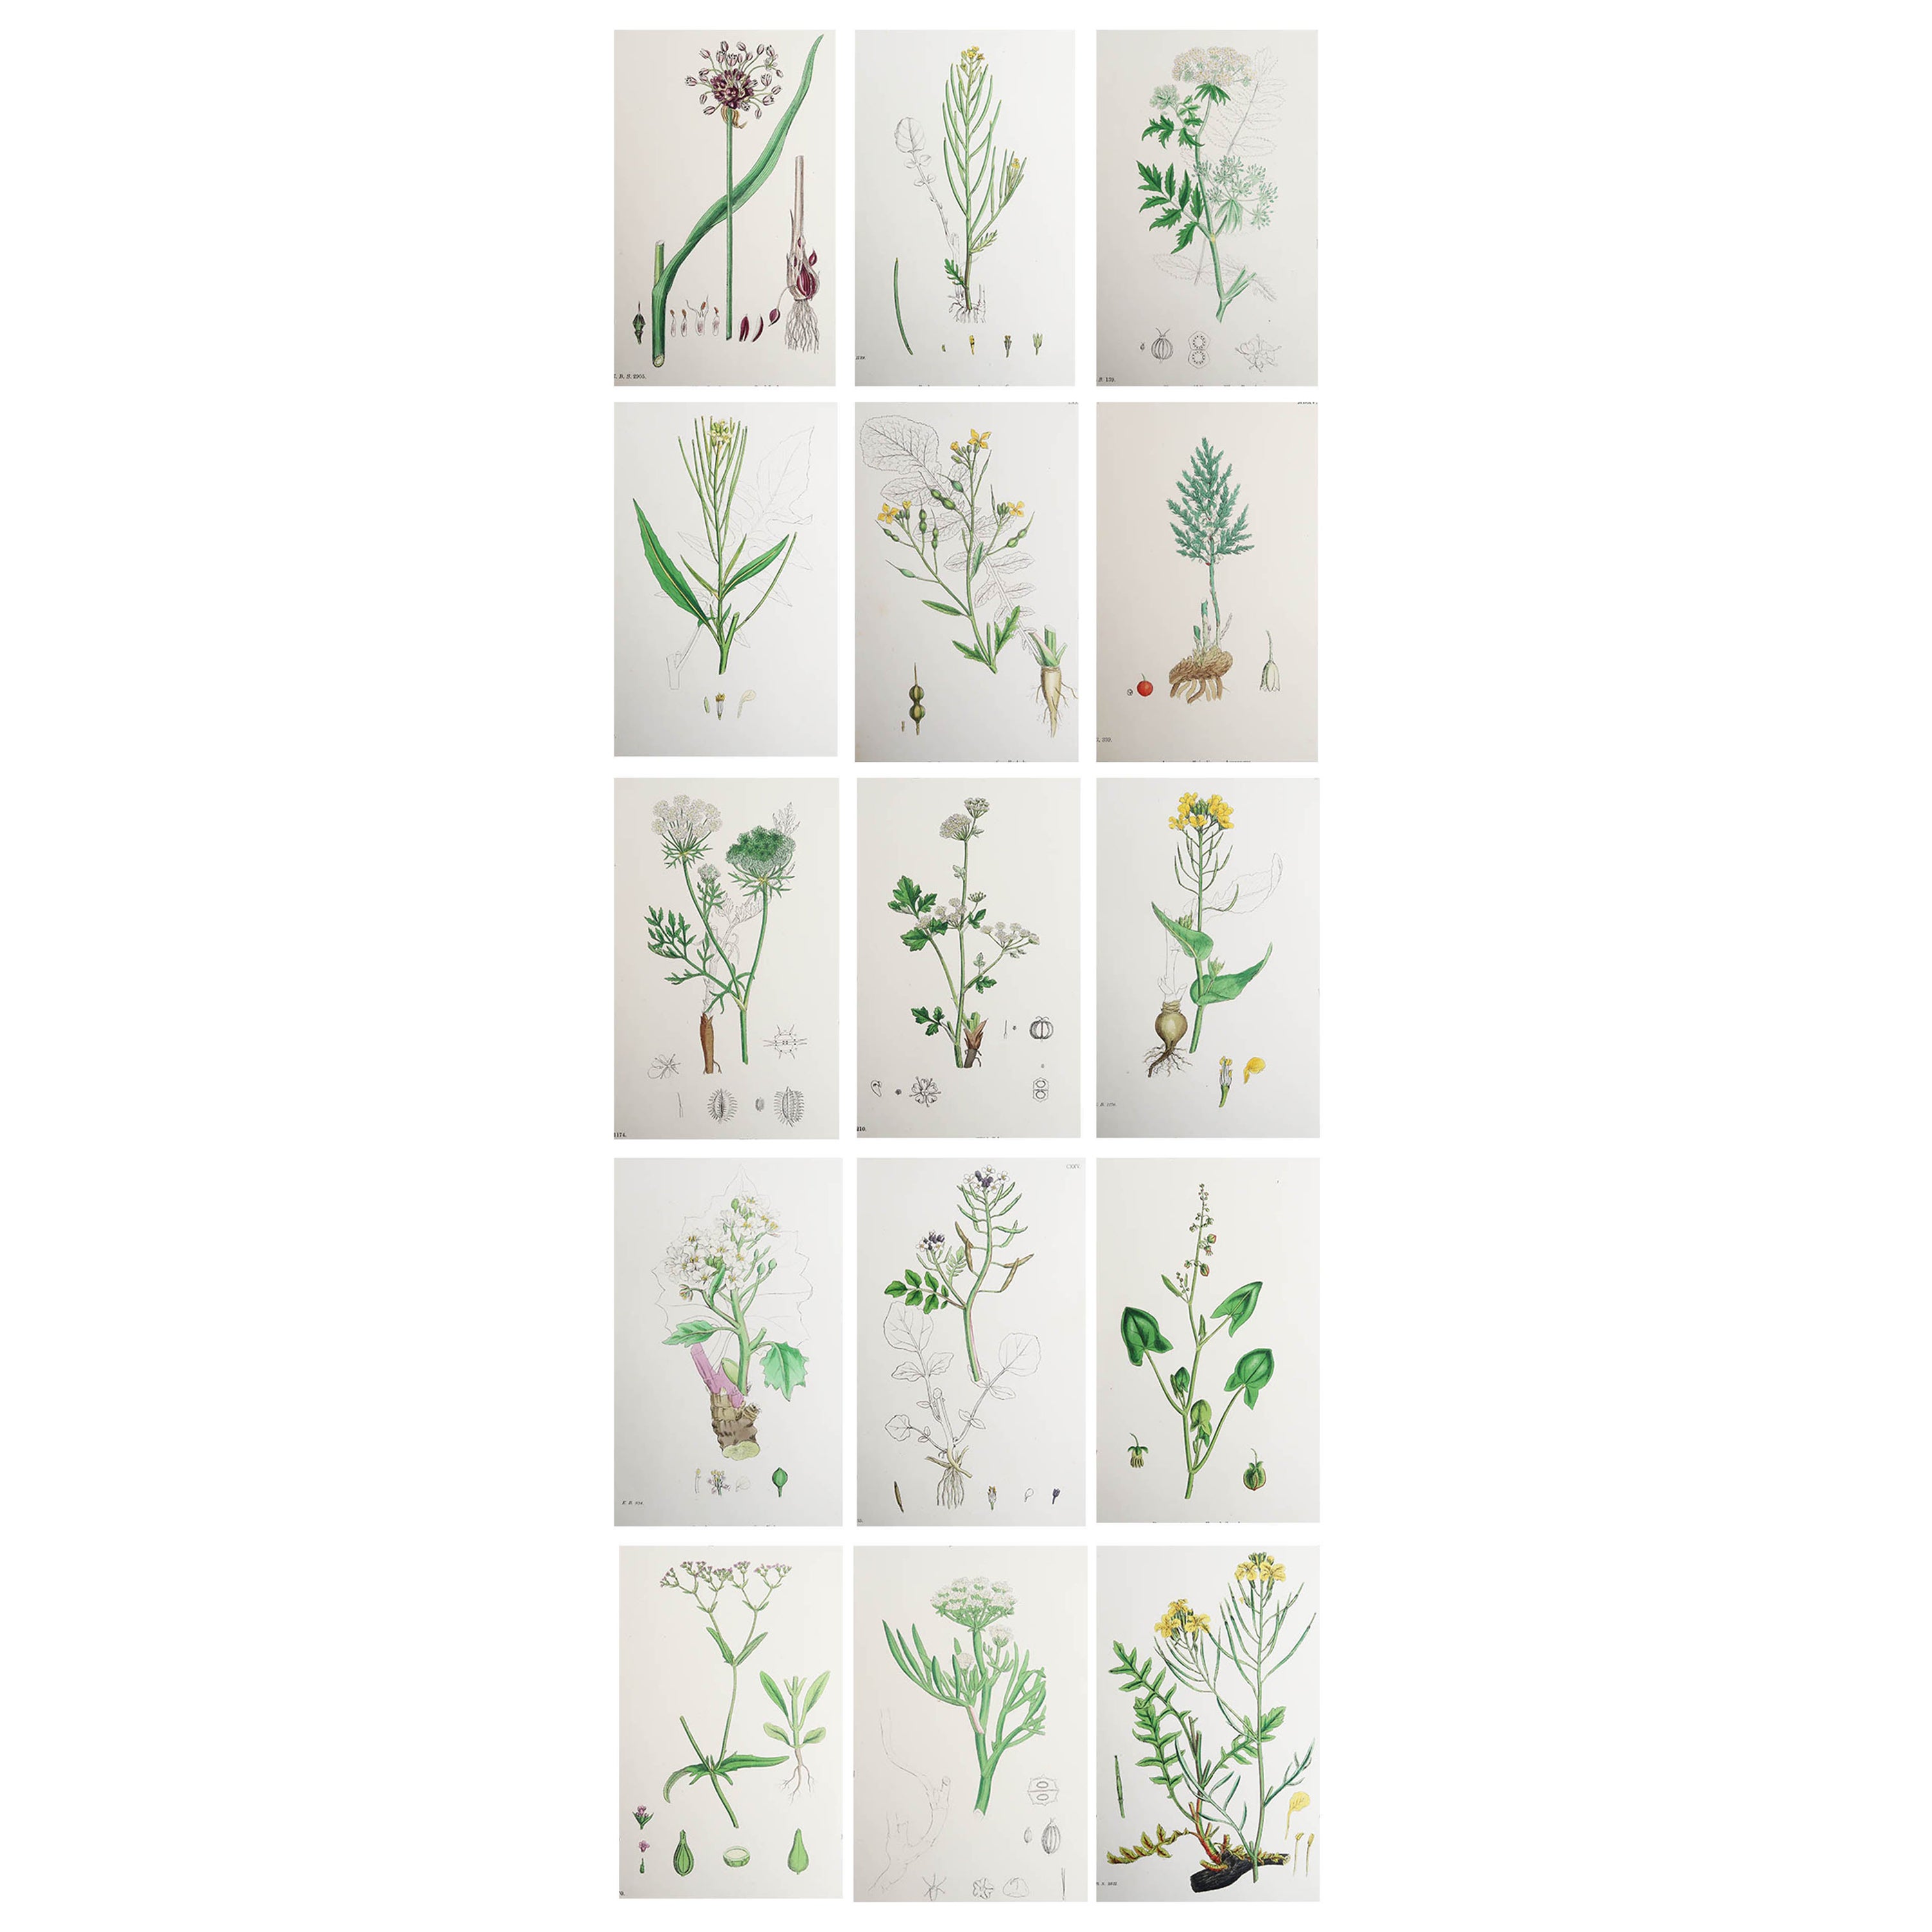 Set of 15 Original Antique Botanical Prints - Vegetables. Circa 1850